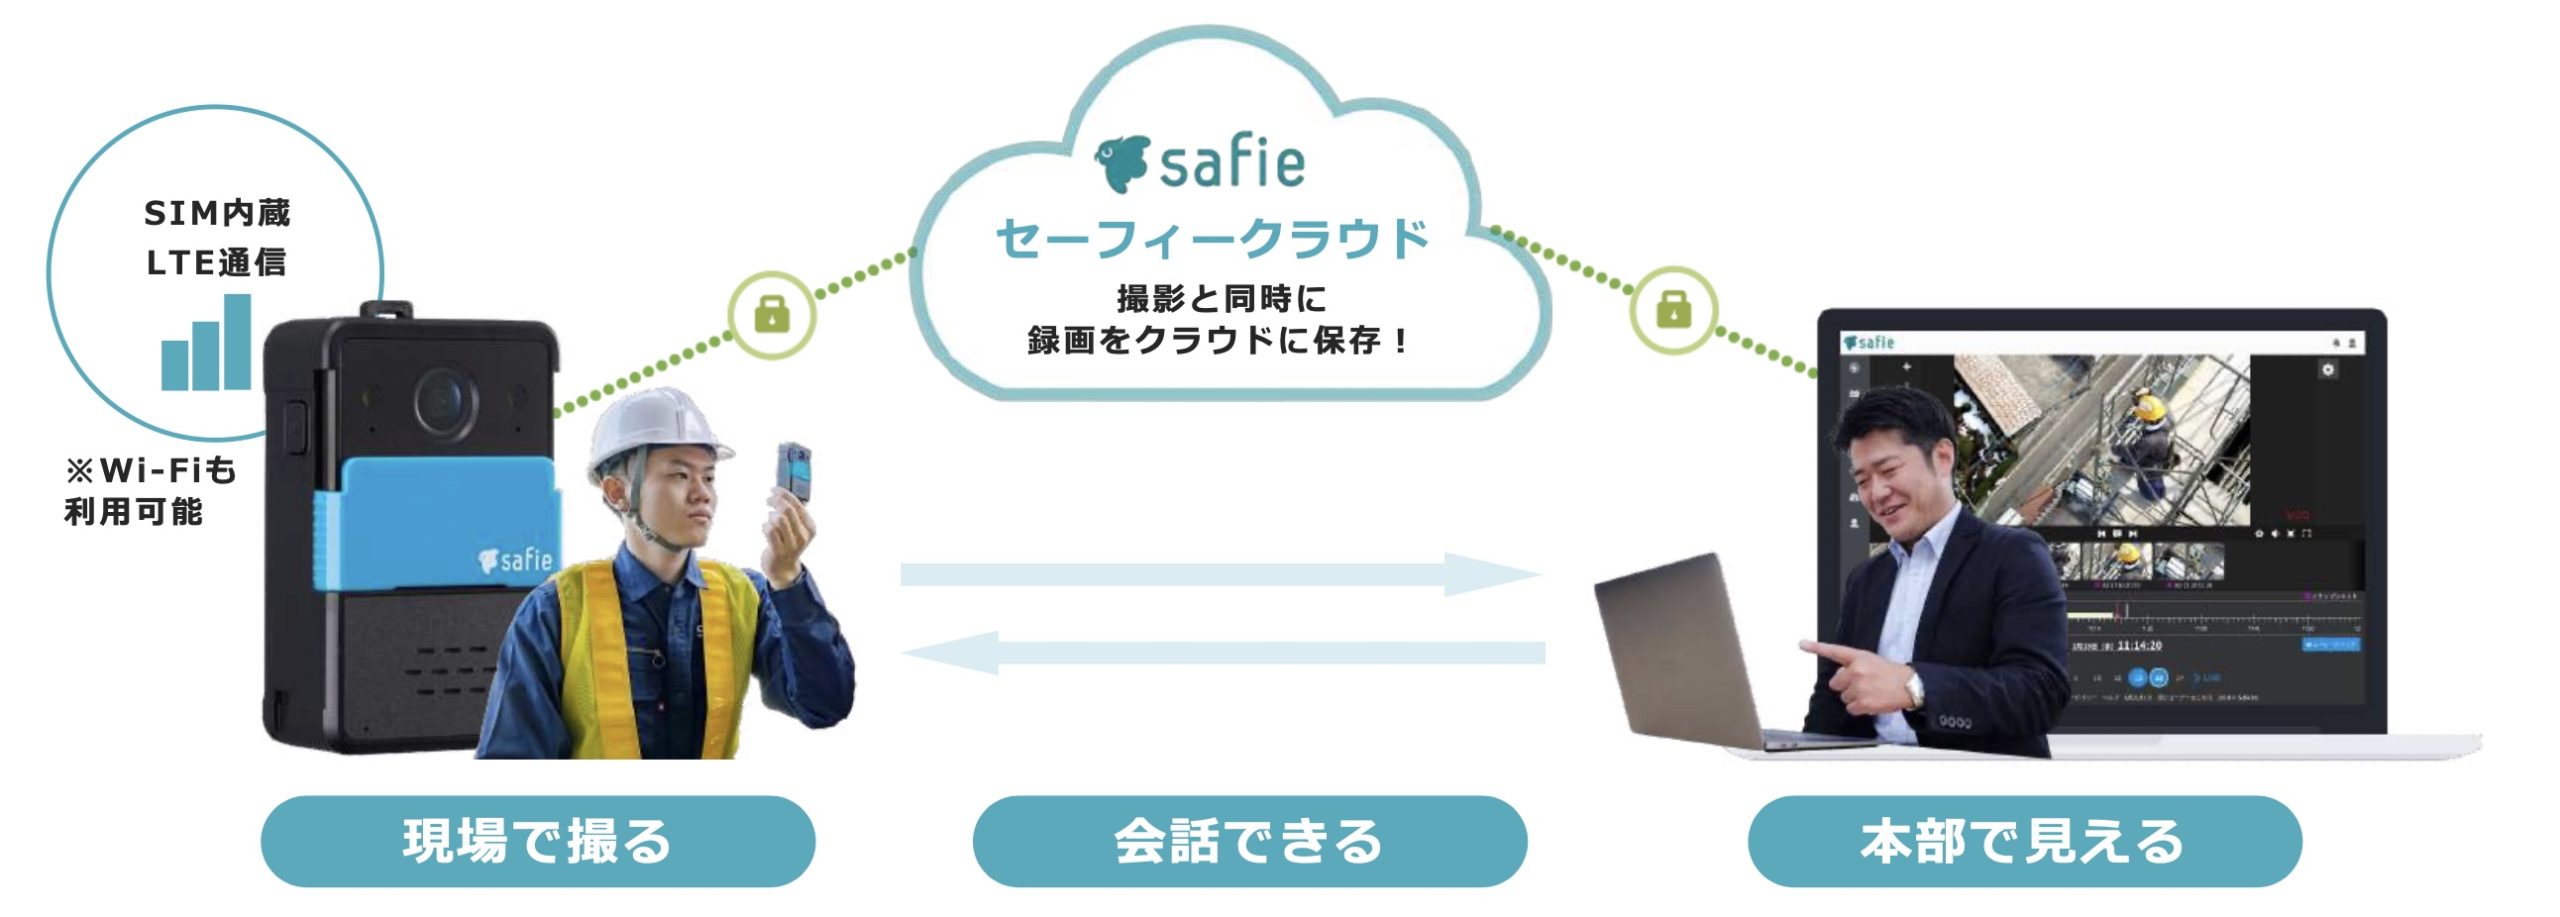 Safie Pocketシリーズの通信の仕組み